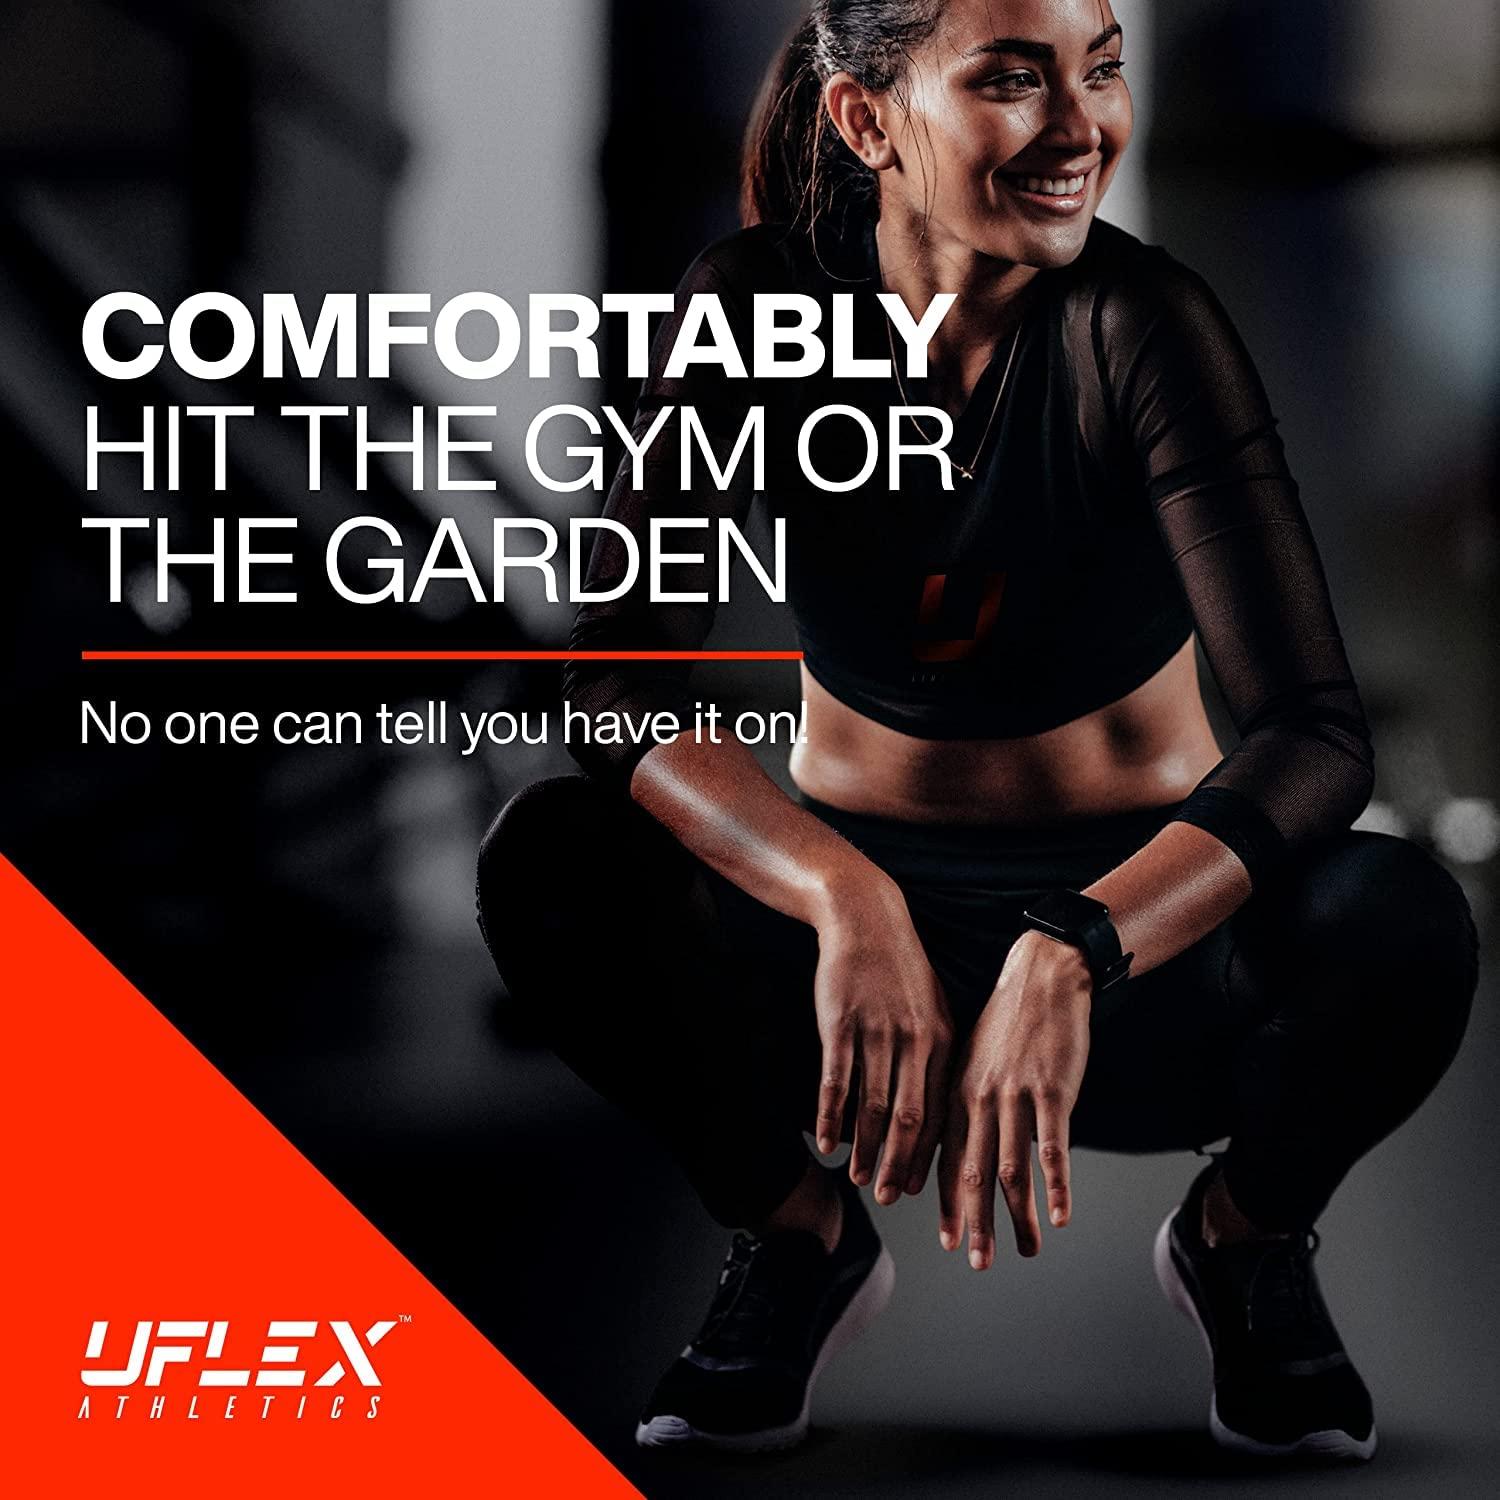 UFlex Athletics